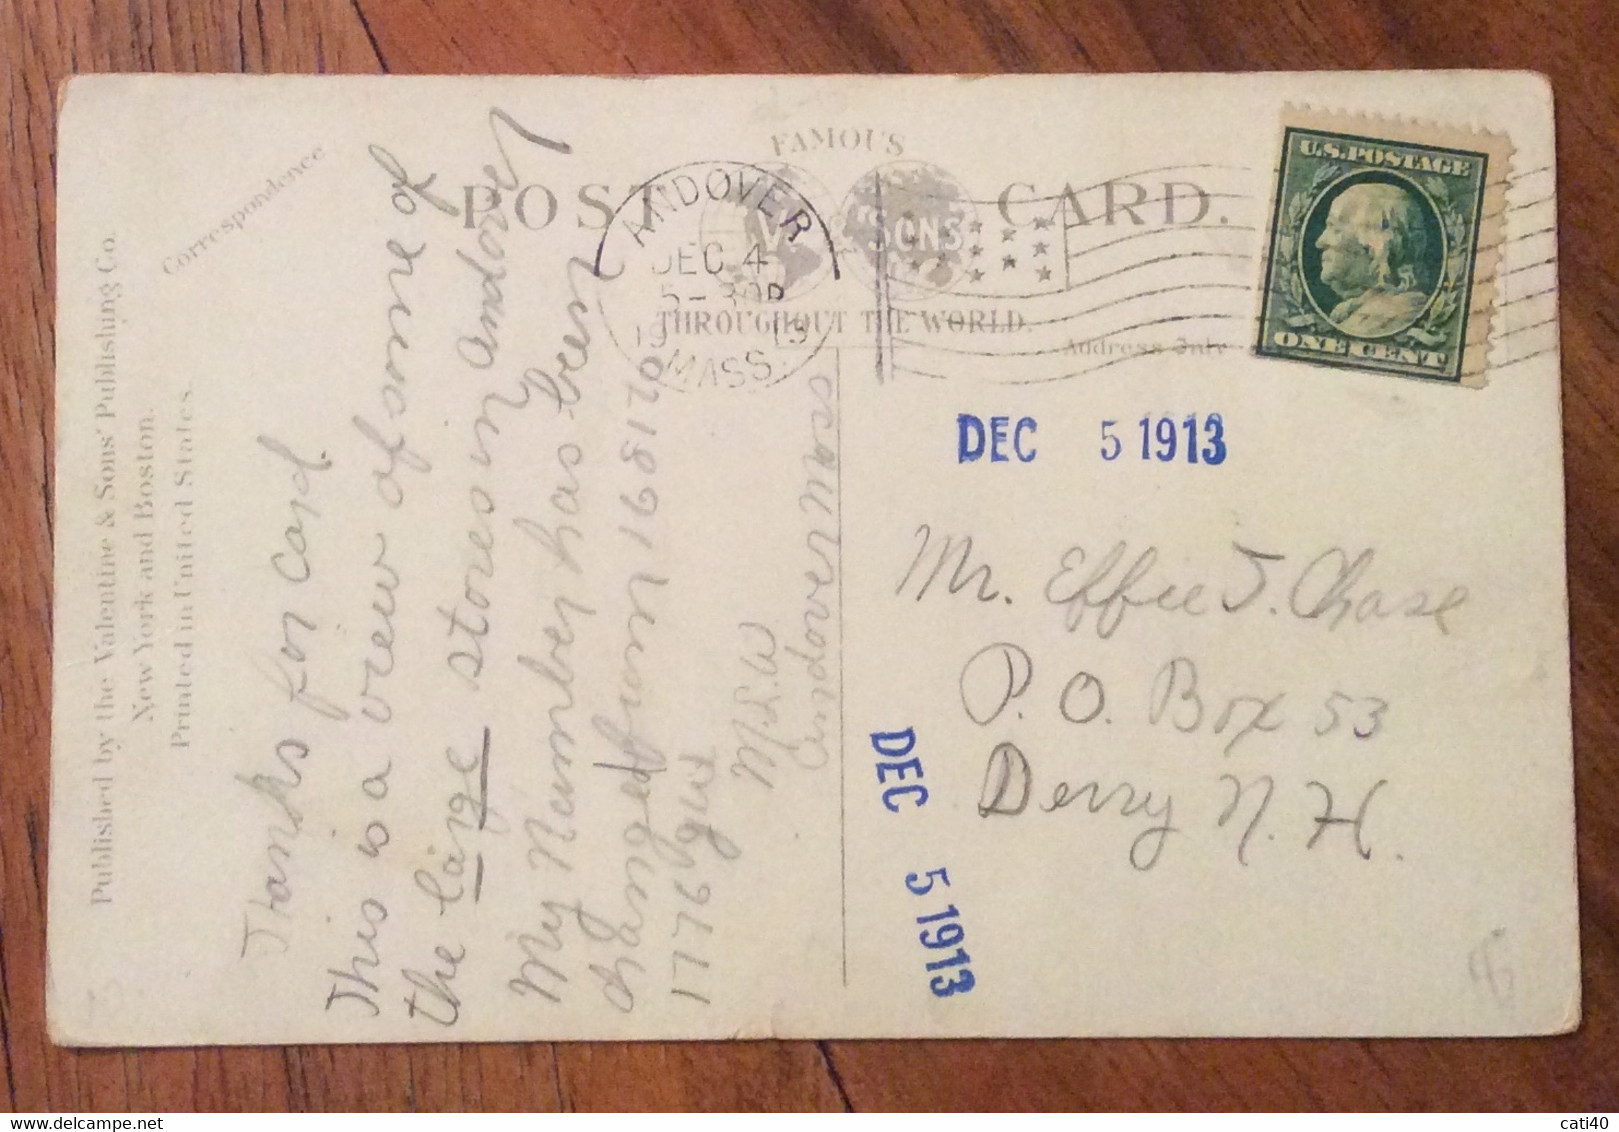 U.S.A. - ANDOVER  ELM SQUARE - VINTAGE POST CARD AUG 27  1915 - Cape Cod